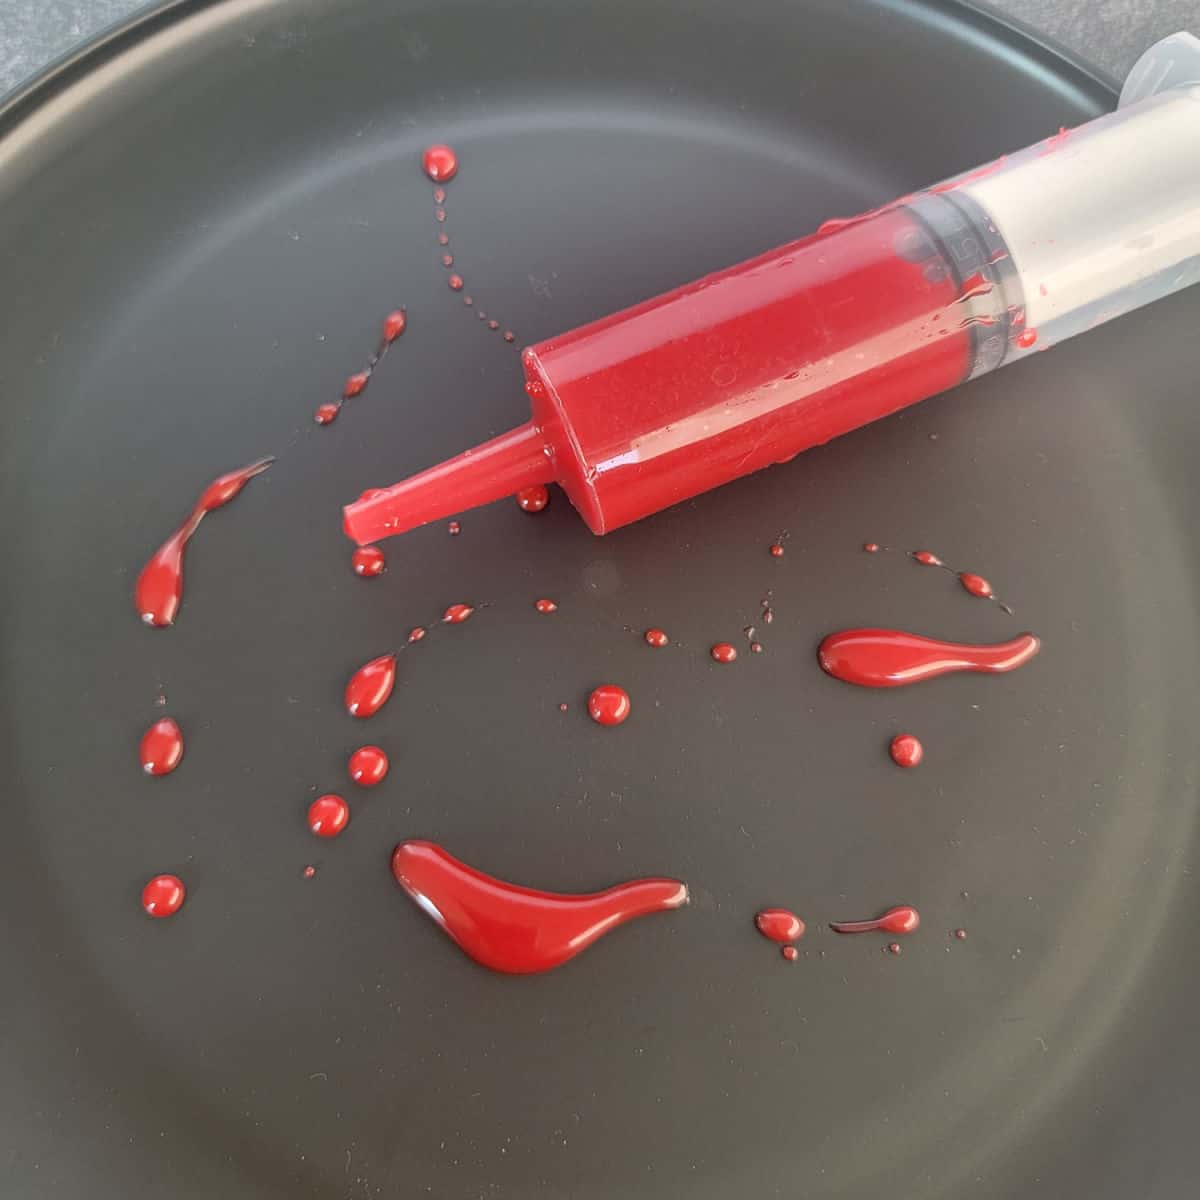 4 Easy Fake Blood Recipes - How to Make Fake Blood